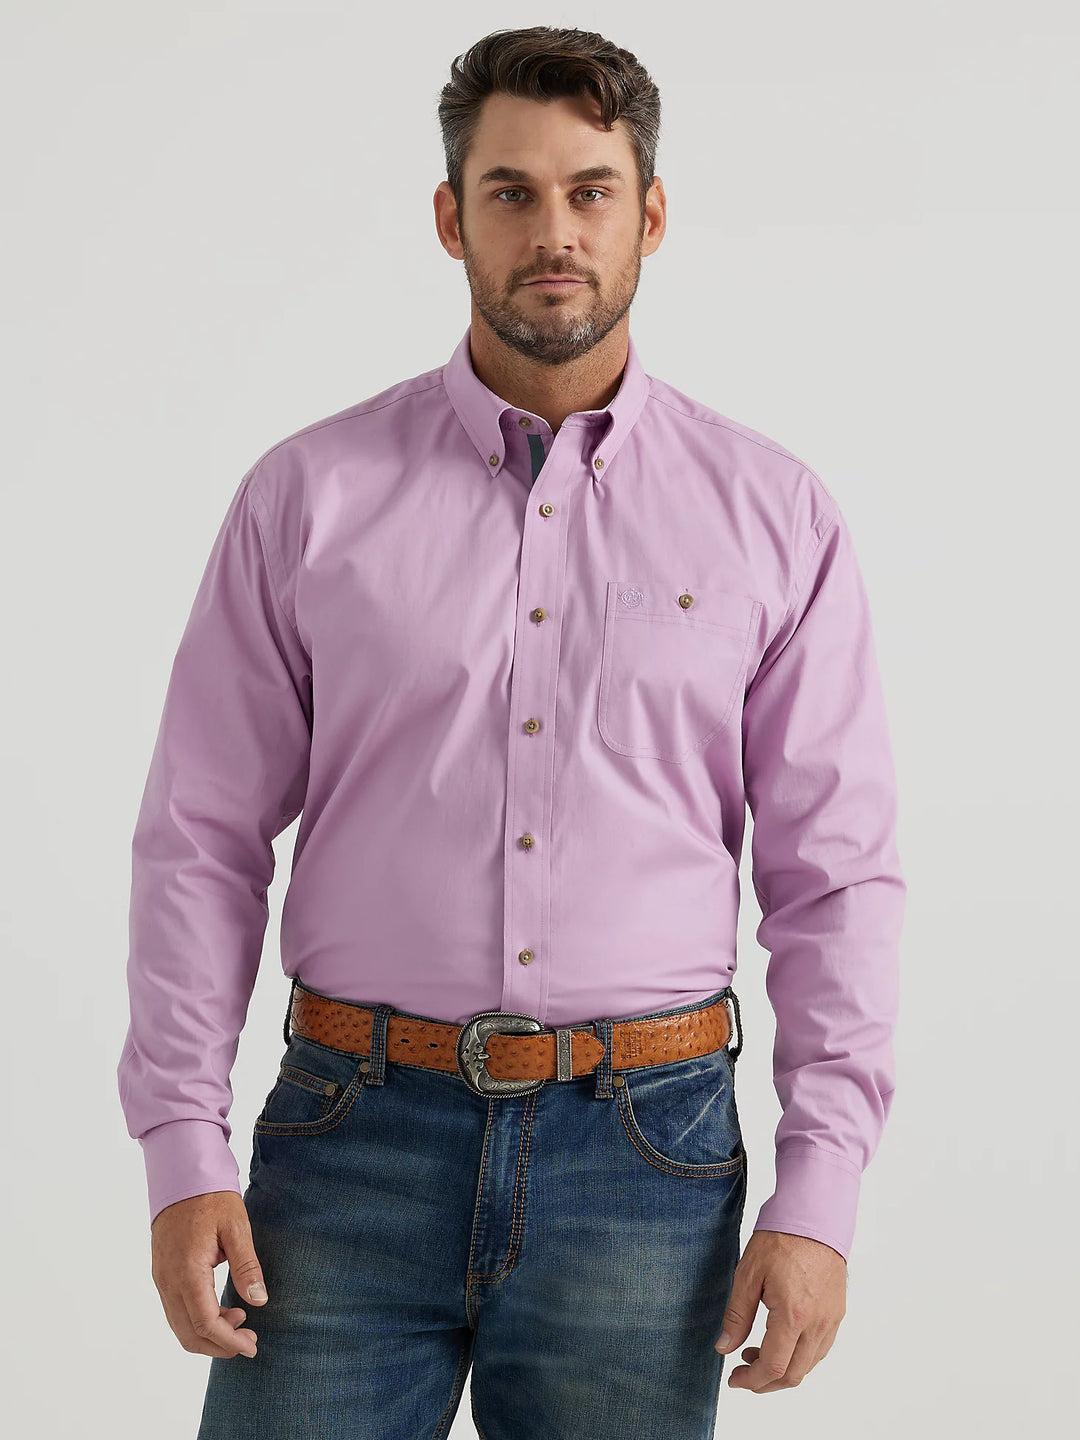 Men's Wrangler George Strait Long Sleeve Button Down One Pocket Shirt in Solid Purple Mist - 112346528